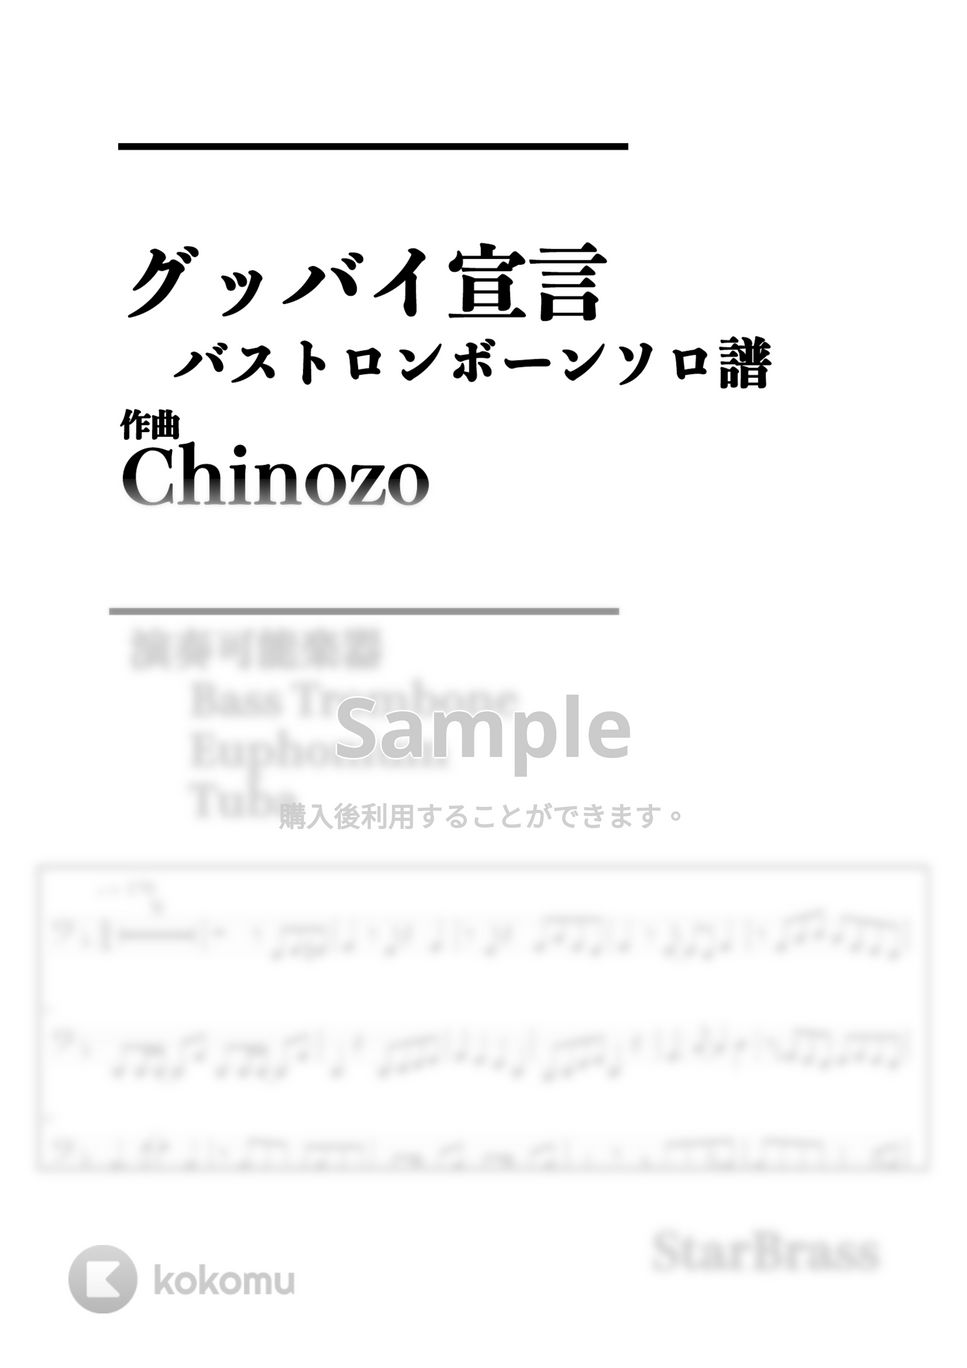 Chinozo - グッバイ宣言 (-Bass Trombone Solo- 原キー) by Creampuff